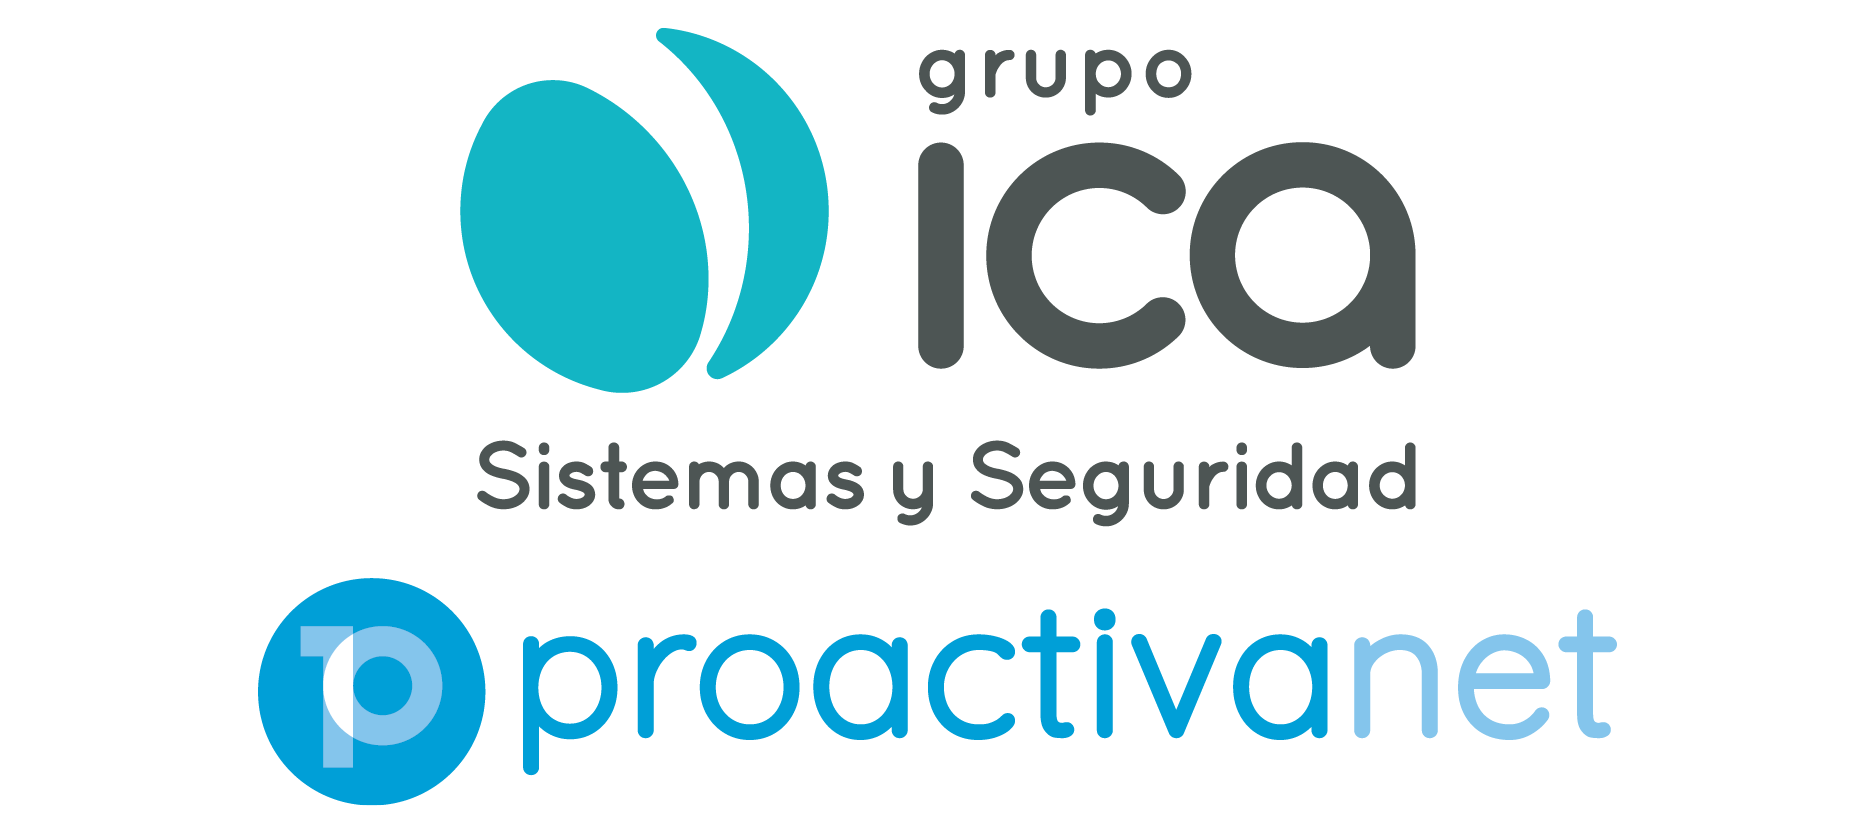 Grupo ICA